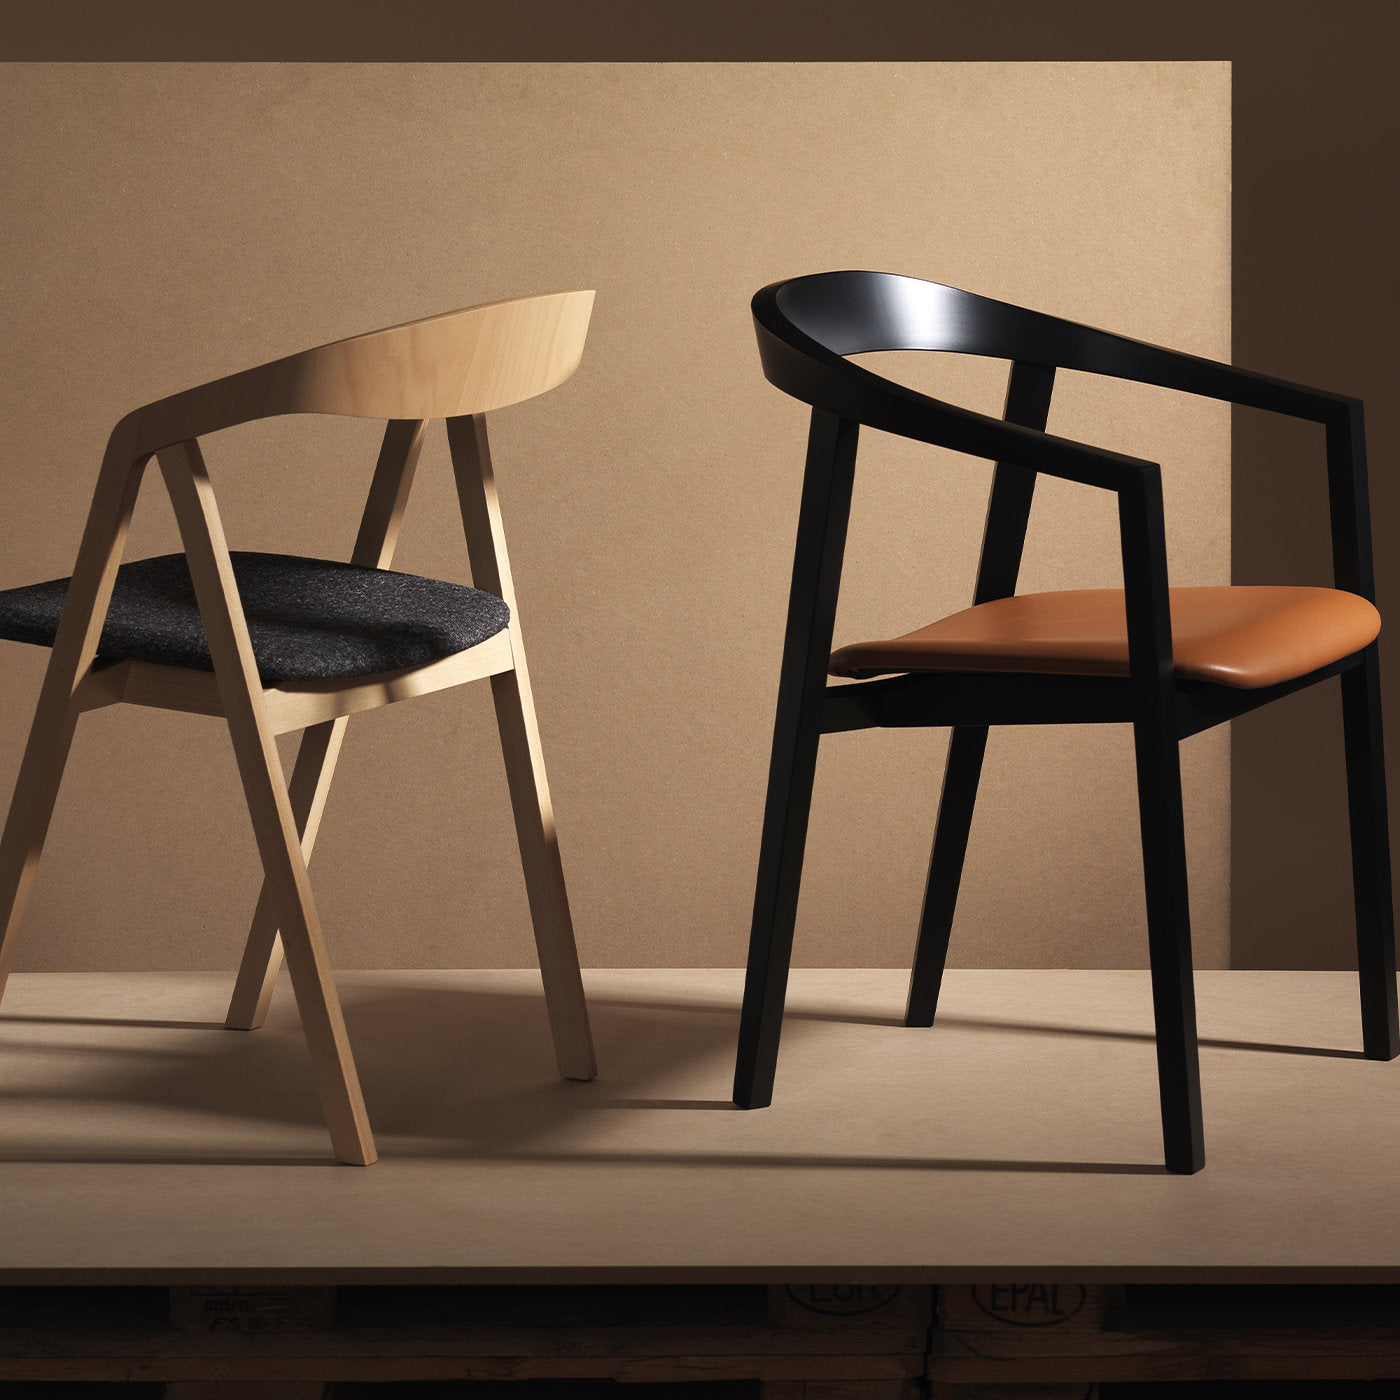 Ro Chair by Tomoko Azumi - Alternative view 1